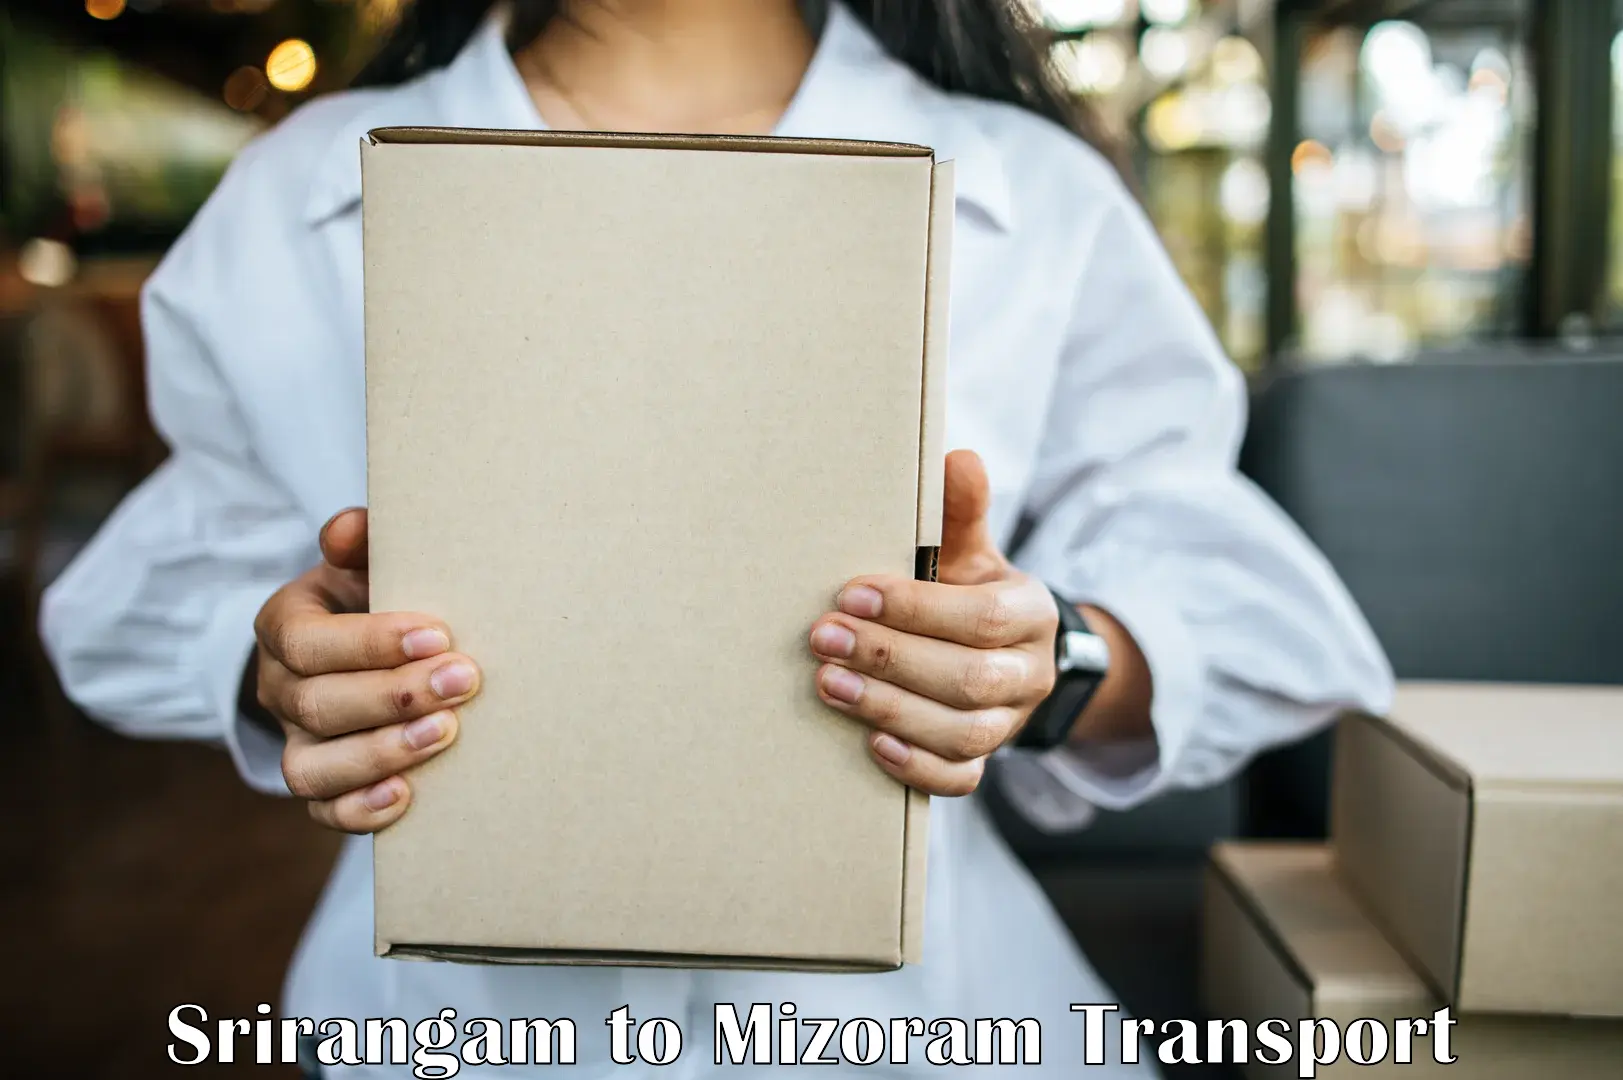 Transport in sharing Srirangam to Mizoram